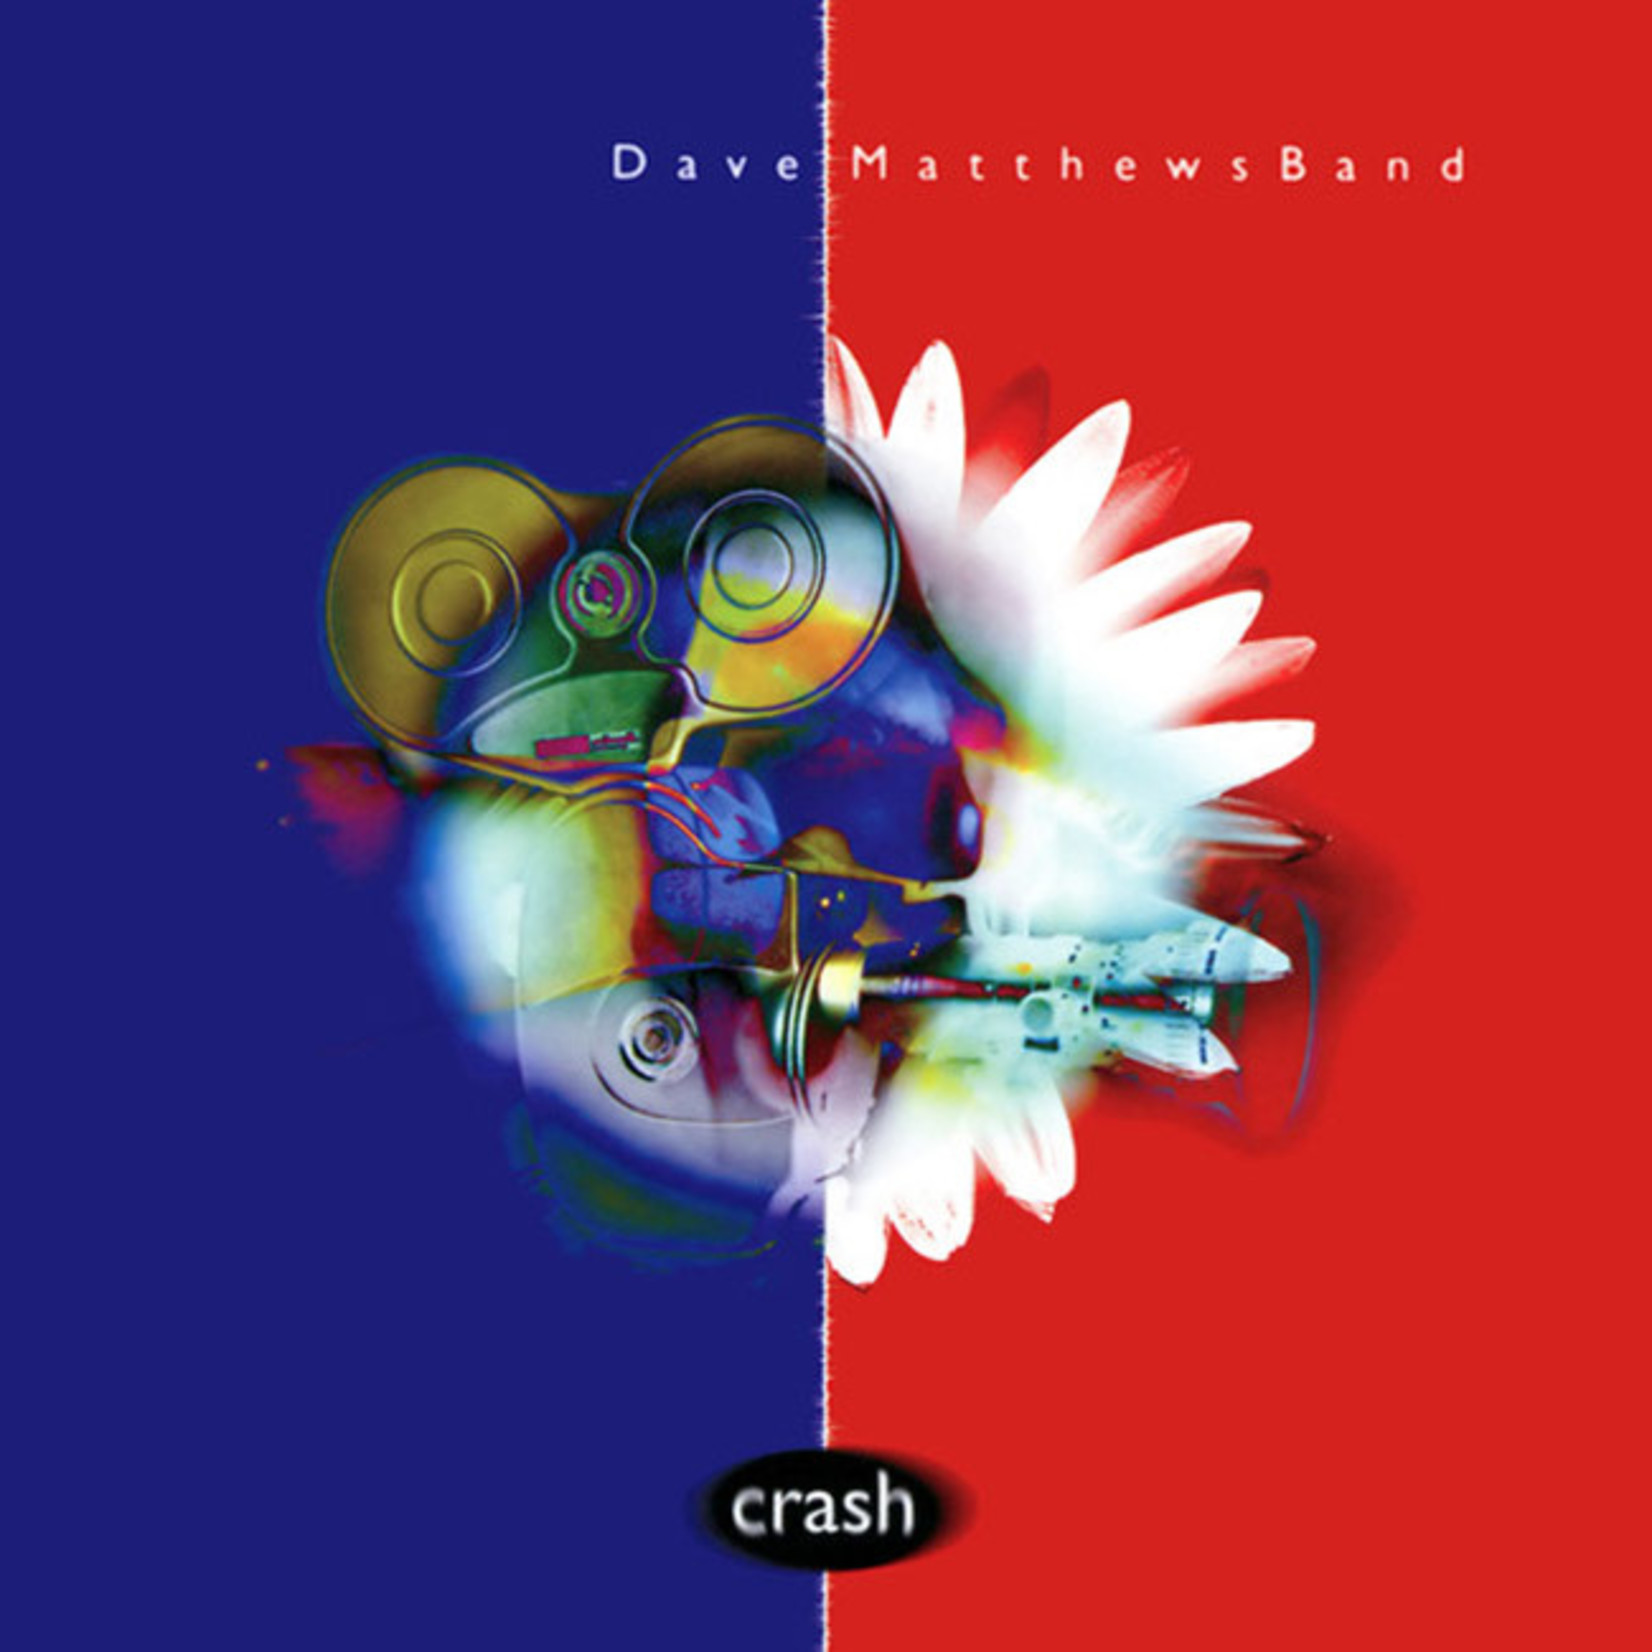 [New] Dave Band Matthews - Crash (2LP)